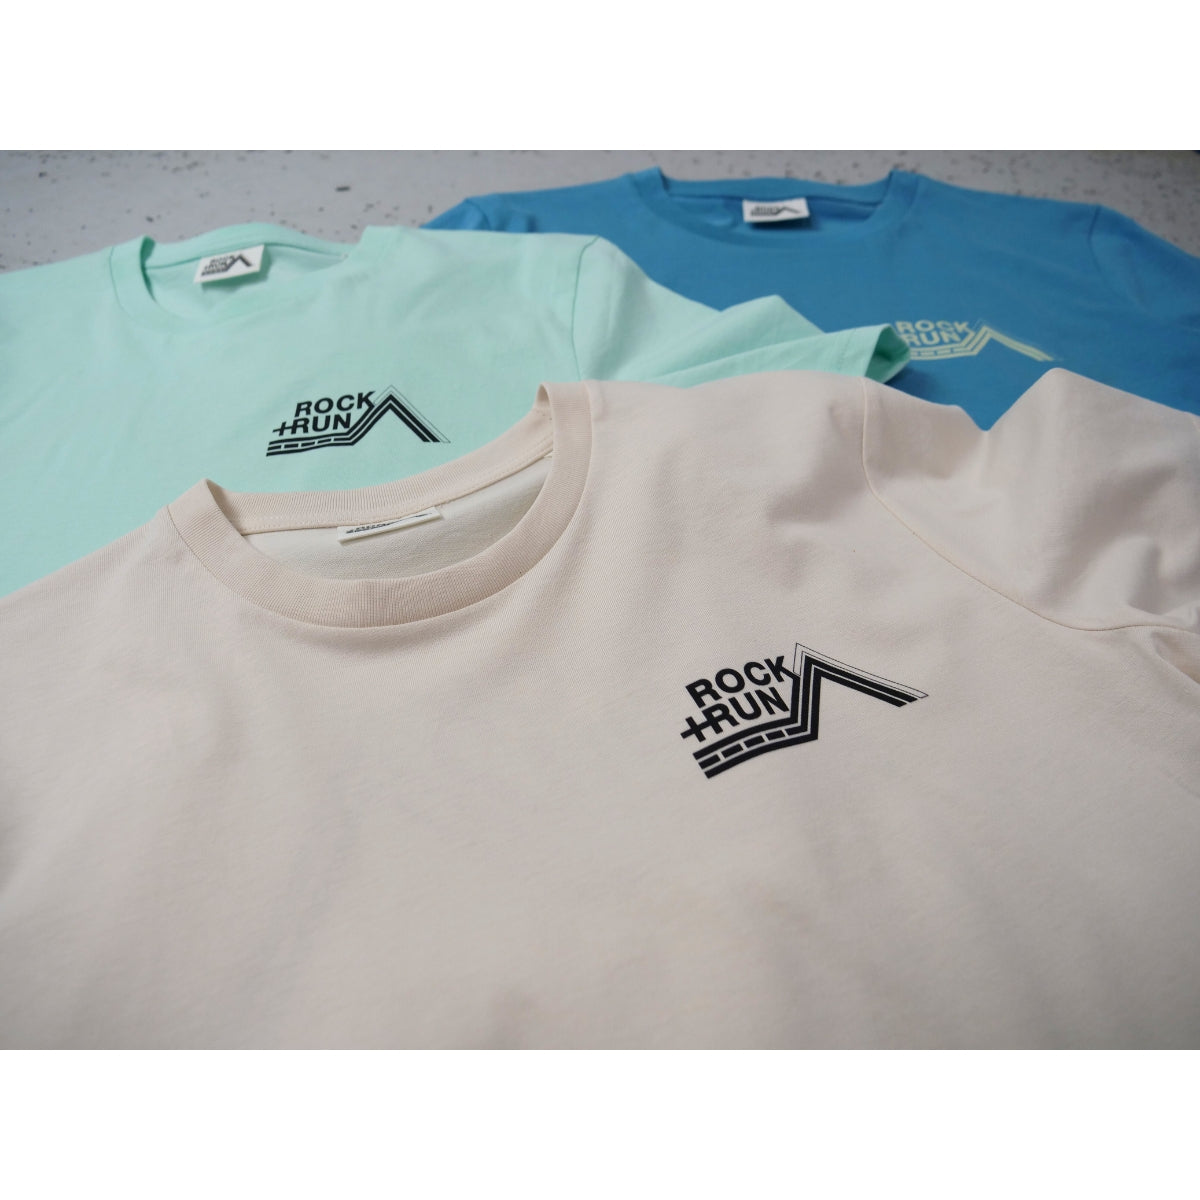 Rock+Run T-Shirt - Atlantic Blue, Caribbean Blue and Vintage White